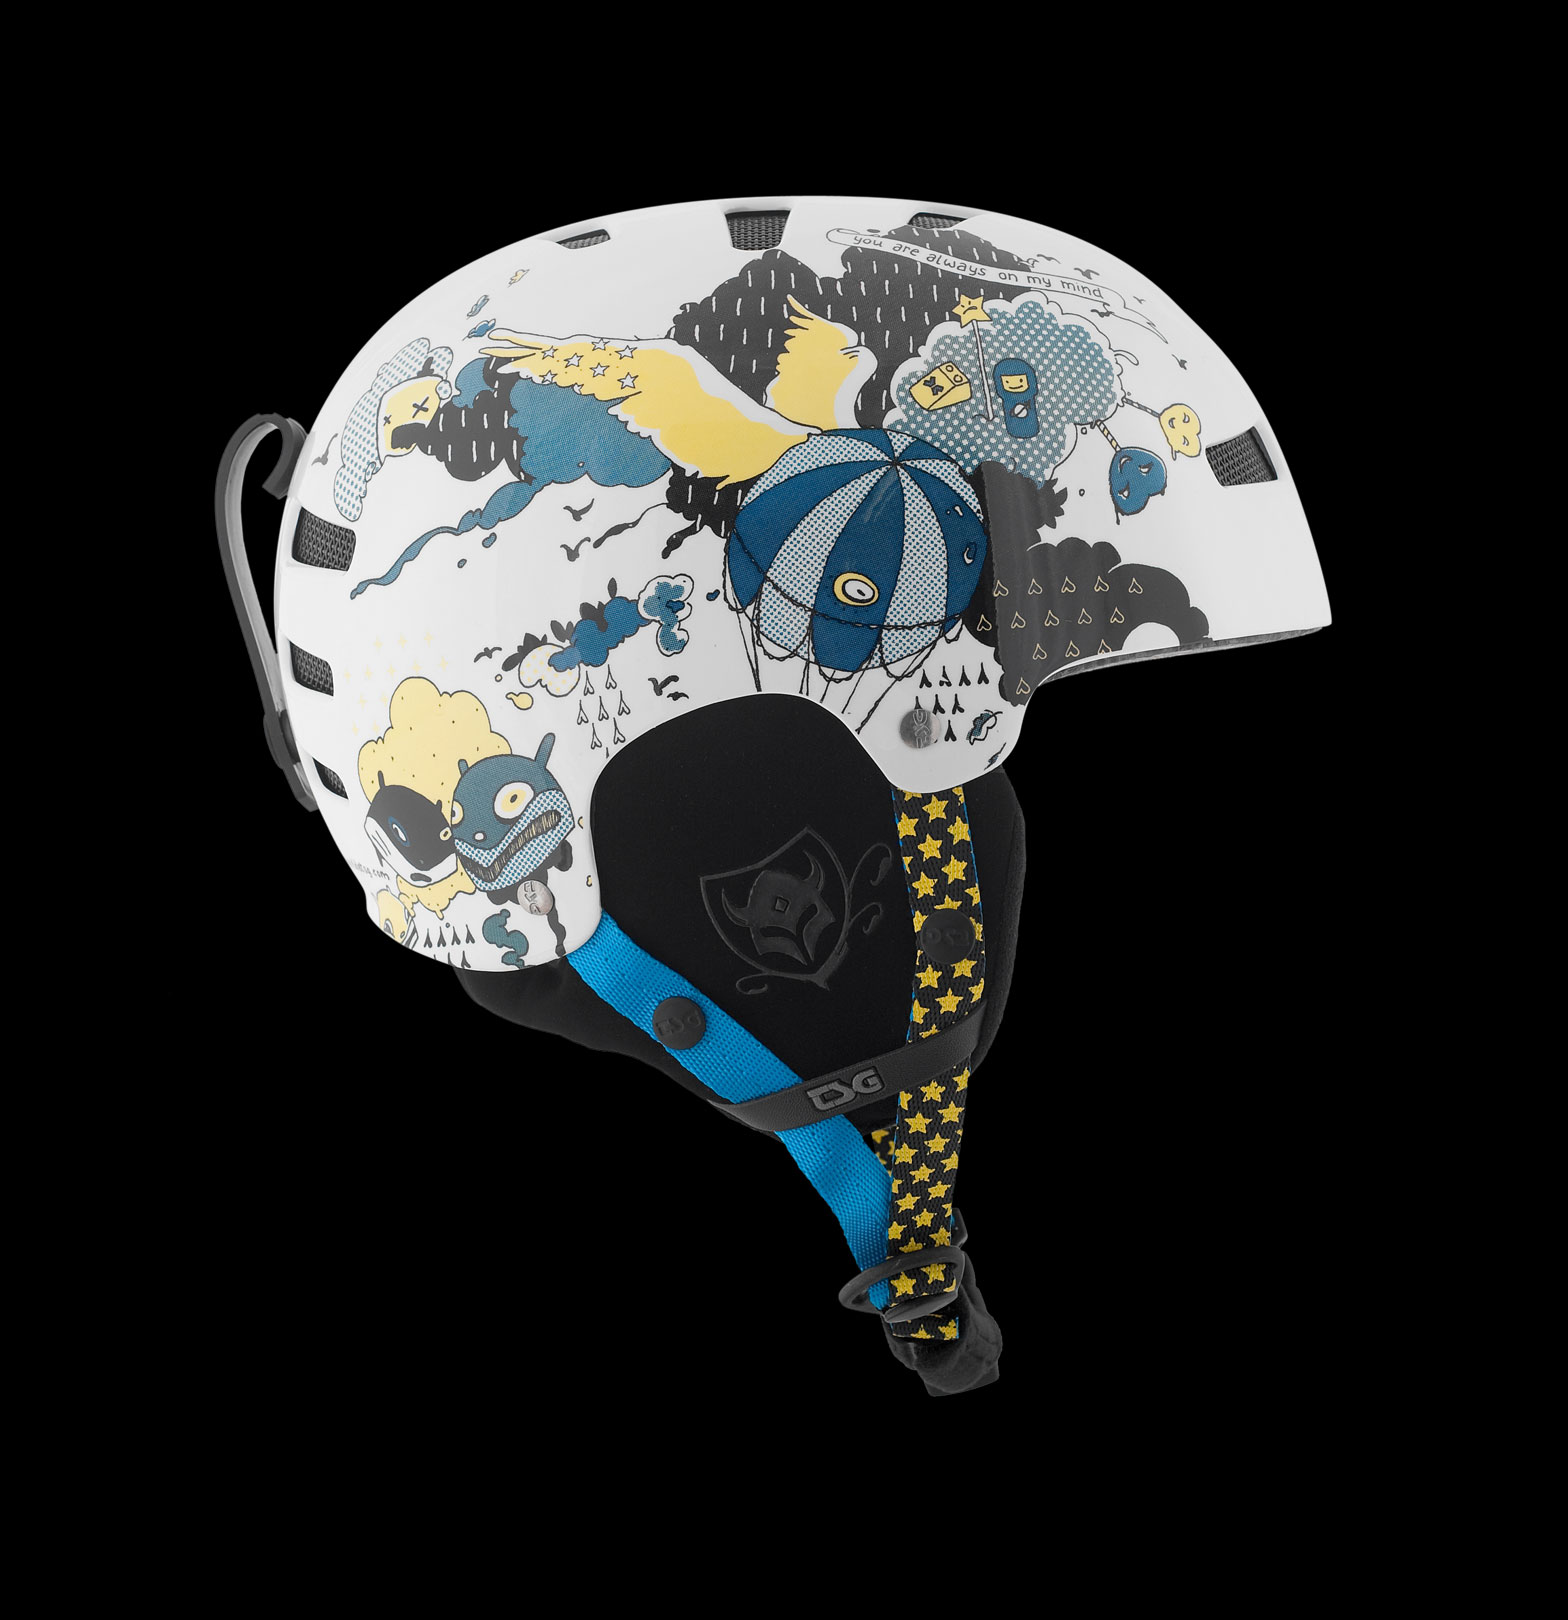 TSG Lotus Helmet design by sixxa, Kathi Macheiner